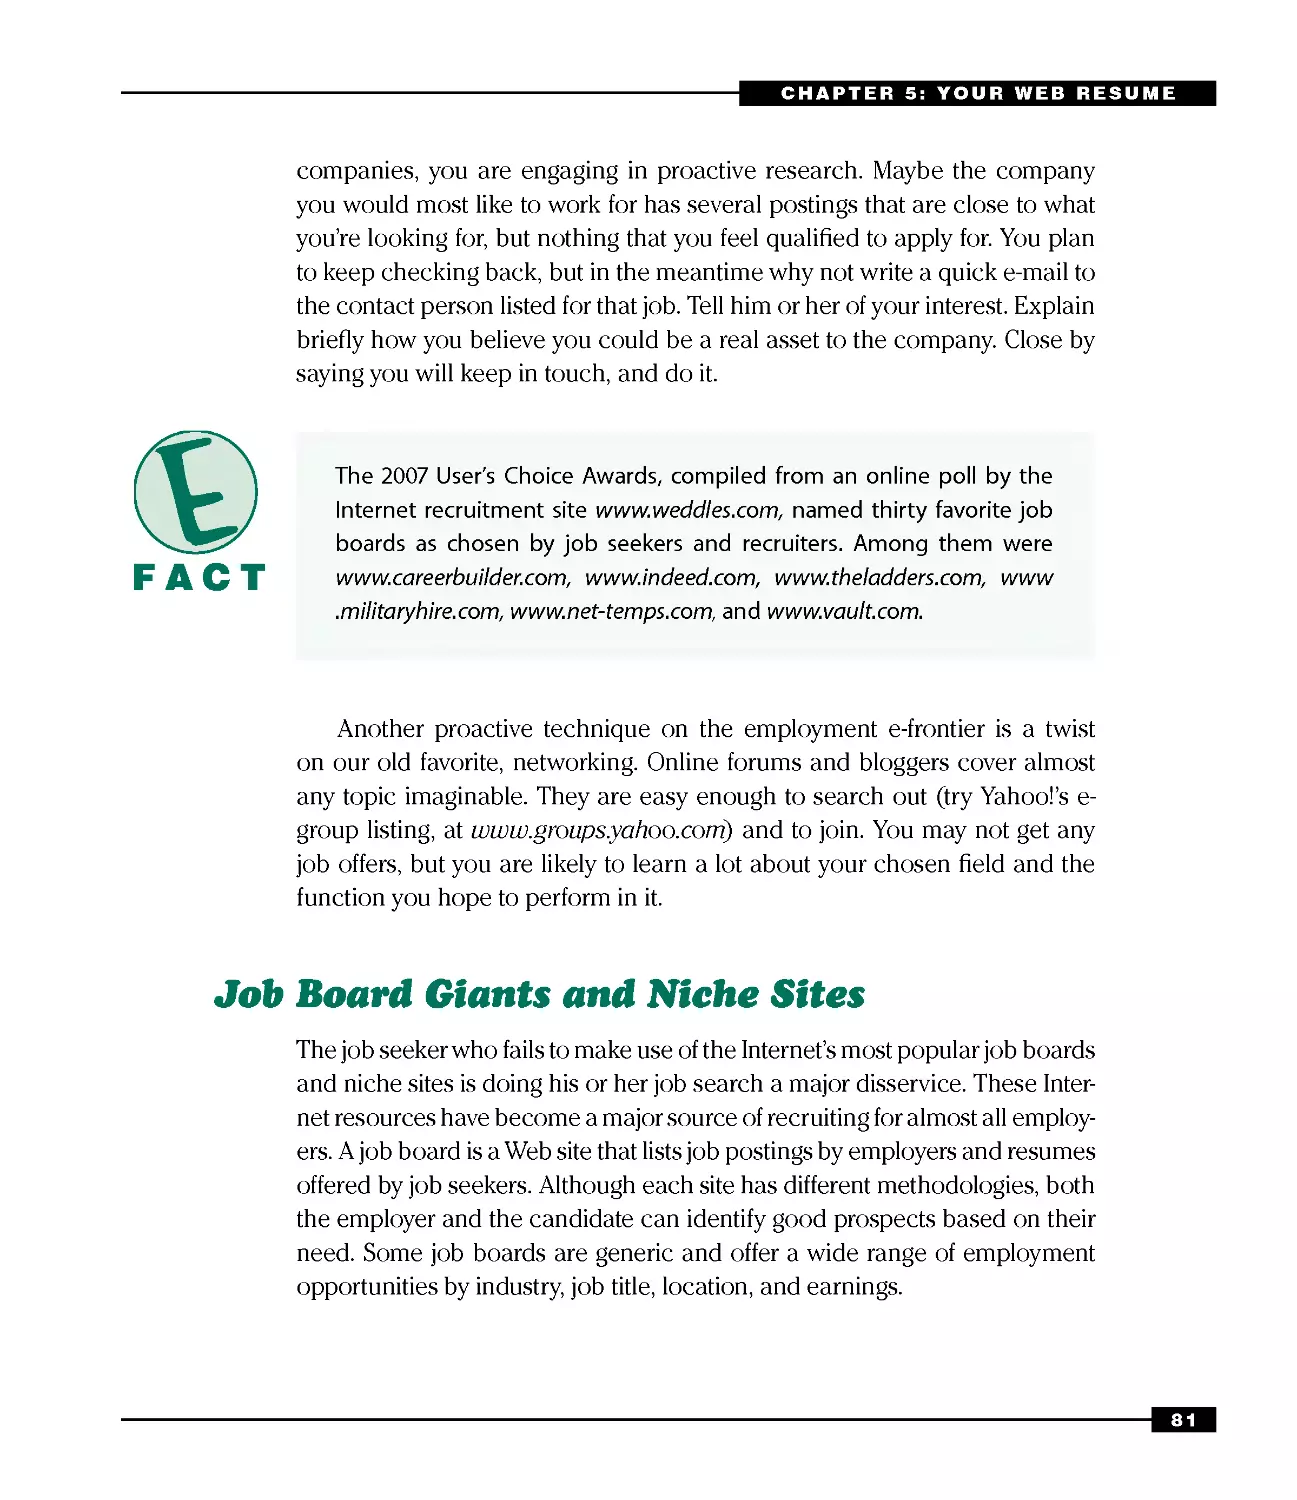 Job Board Giants and Niche Sites